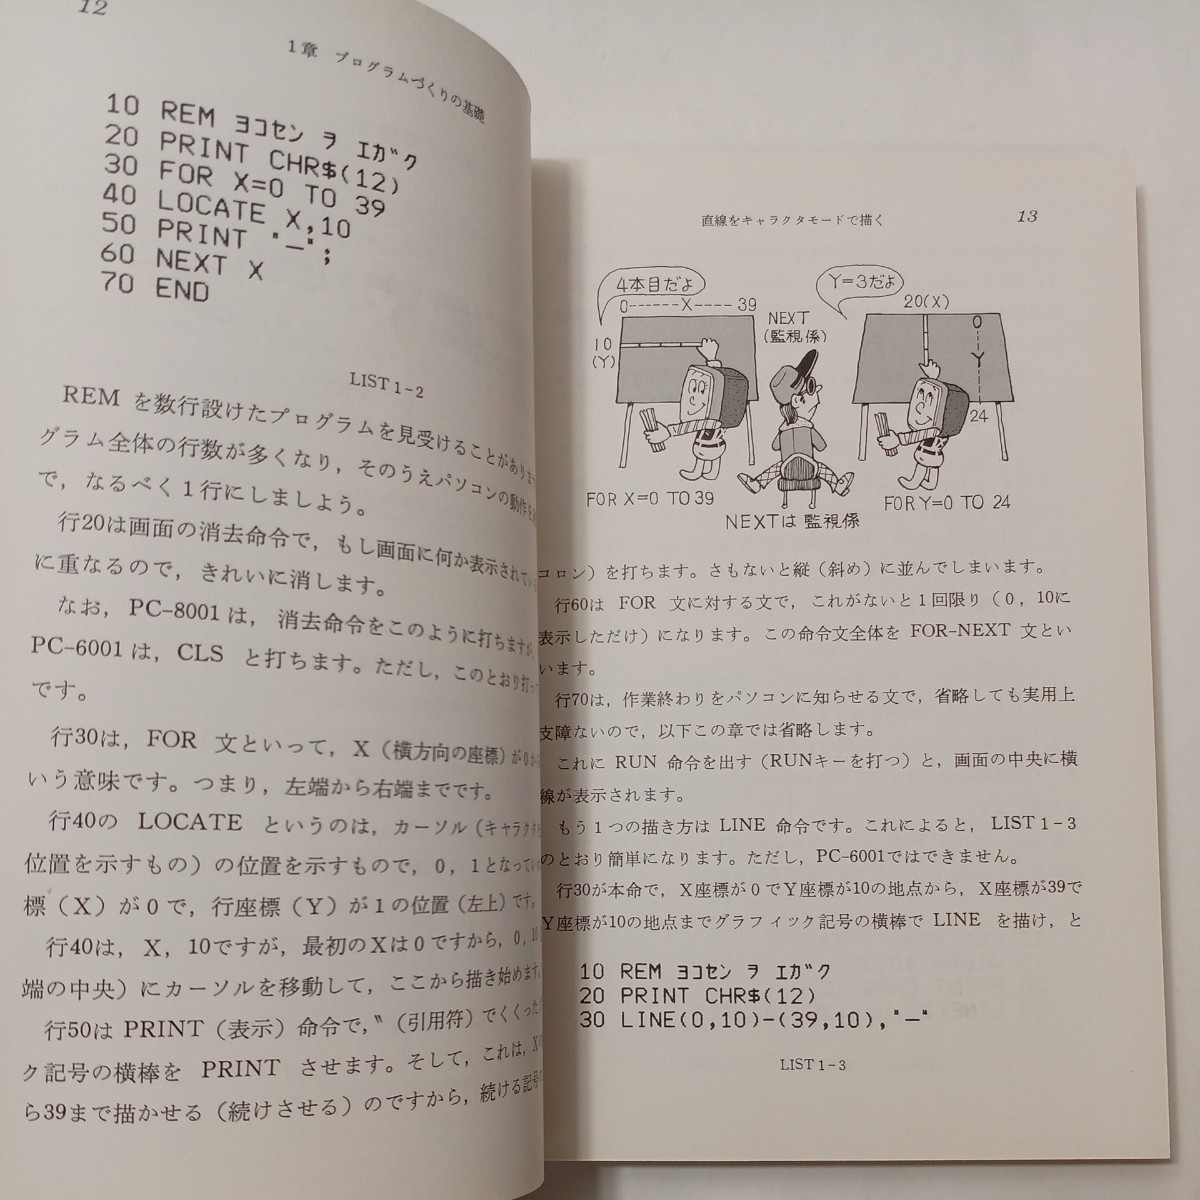 zaa-512♪やさしいマイコンゲーム (ホビーテクニック (46)) 奥沢清吉( 著 ) 日本放送出版協会 (1983/7/1)